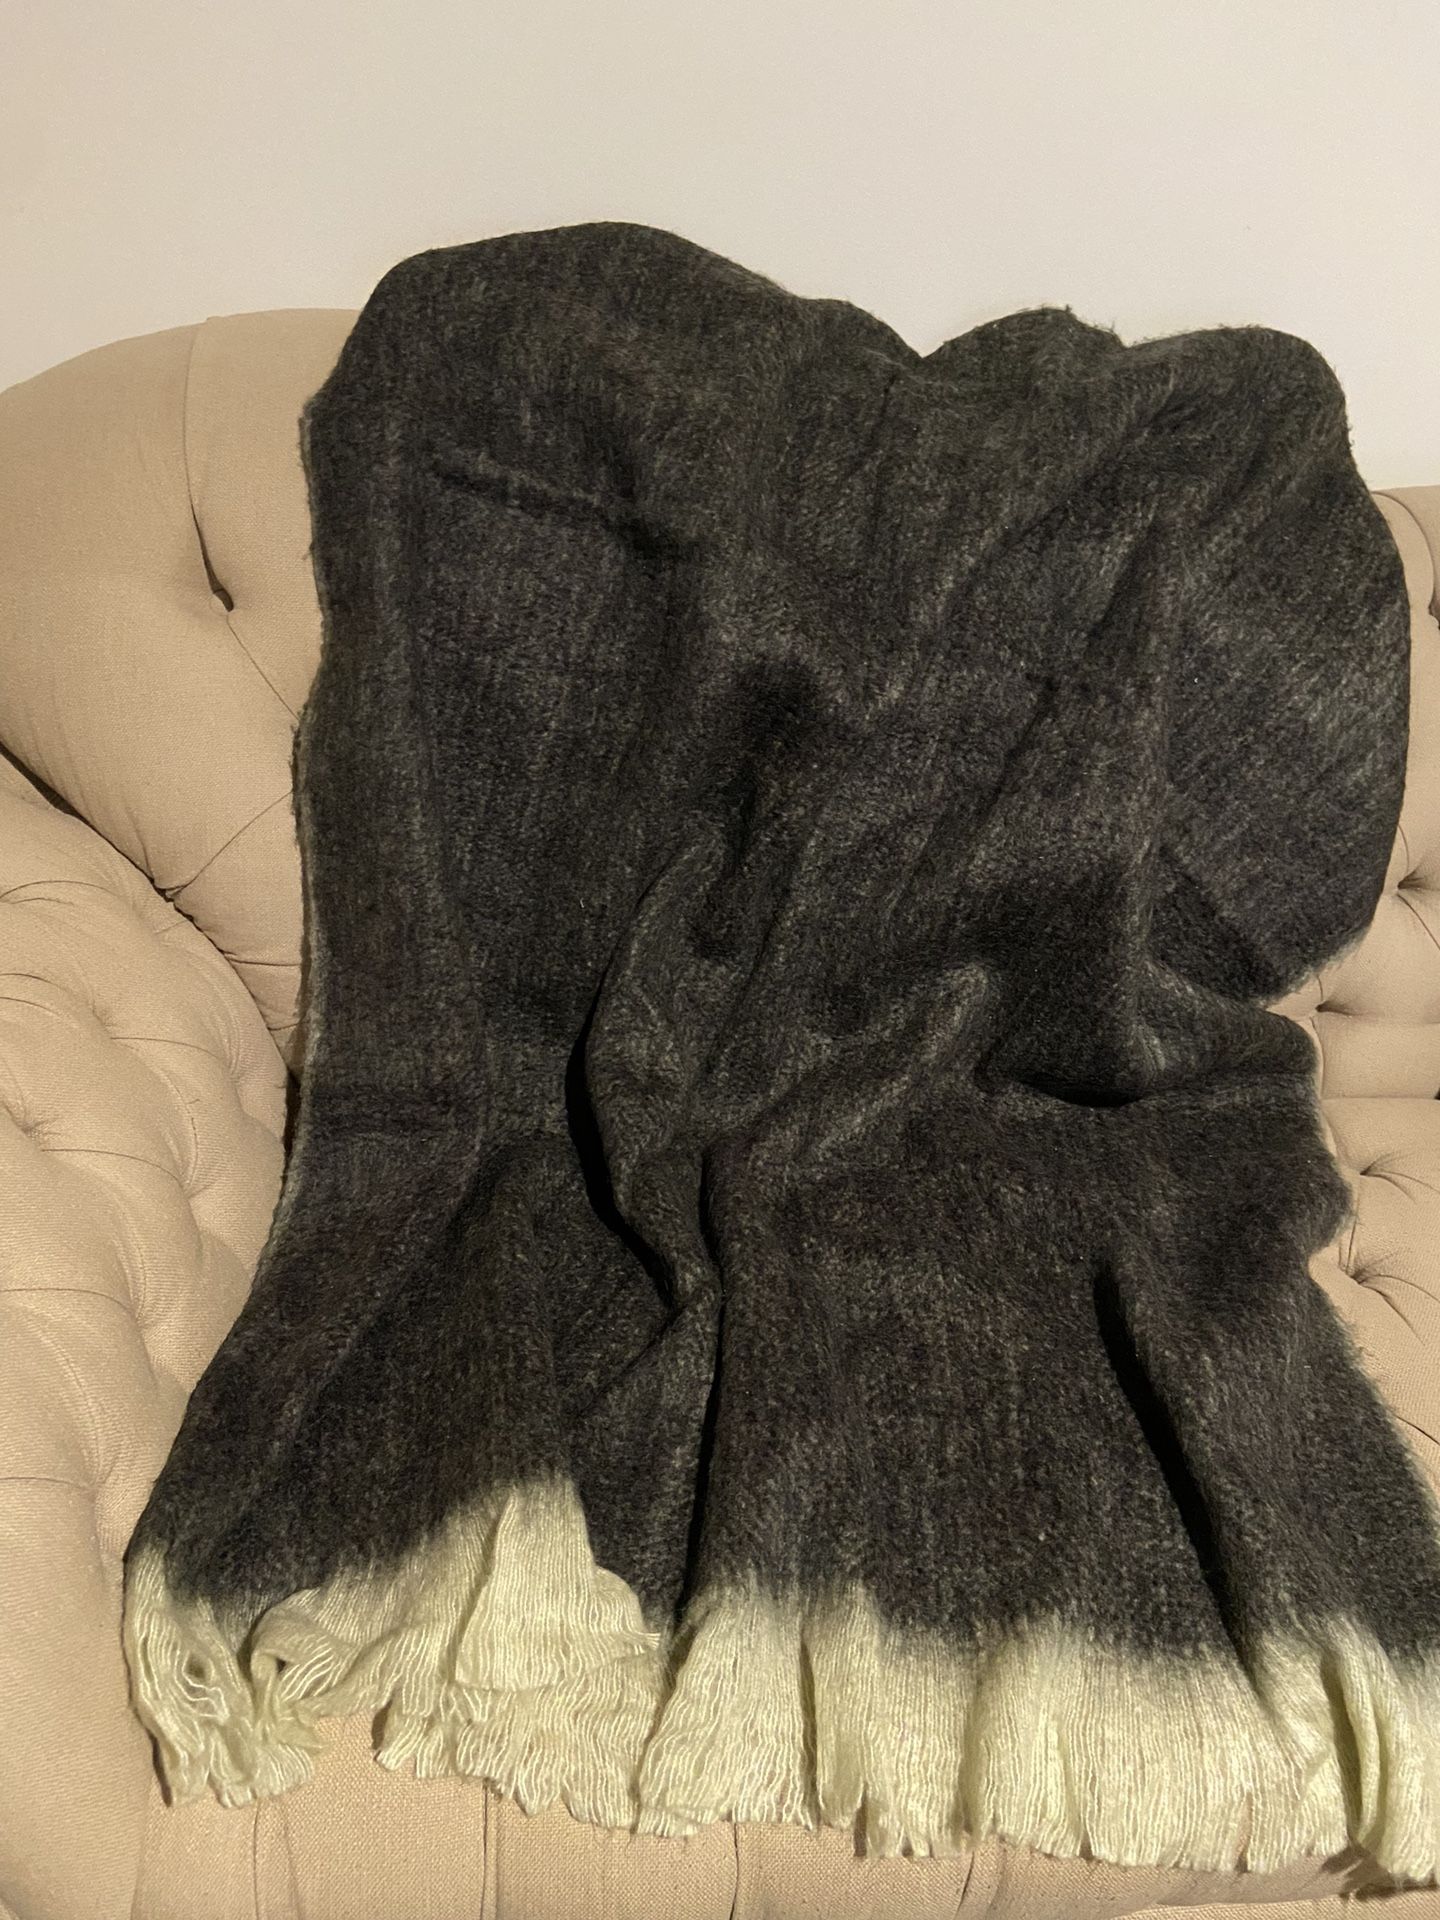 New Arhaus Brushed Mohair Throw Blanket  47”x 72”